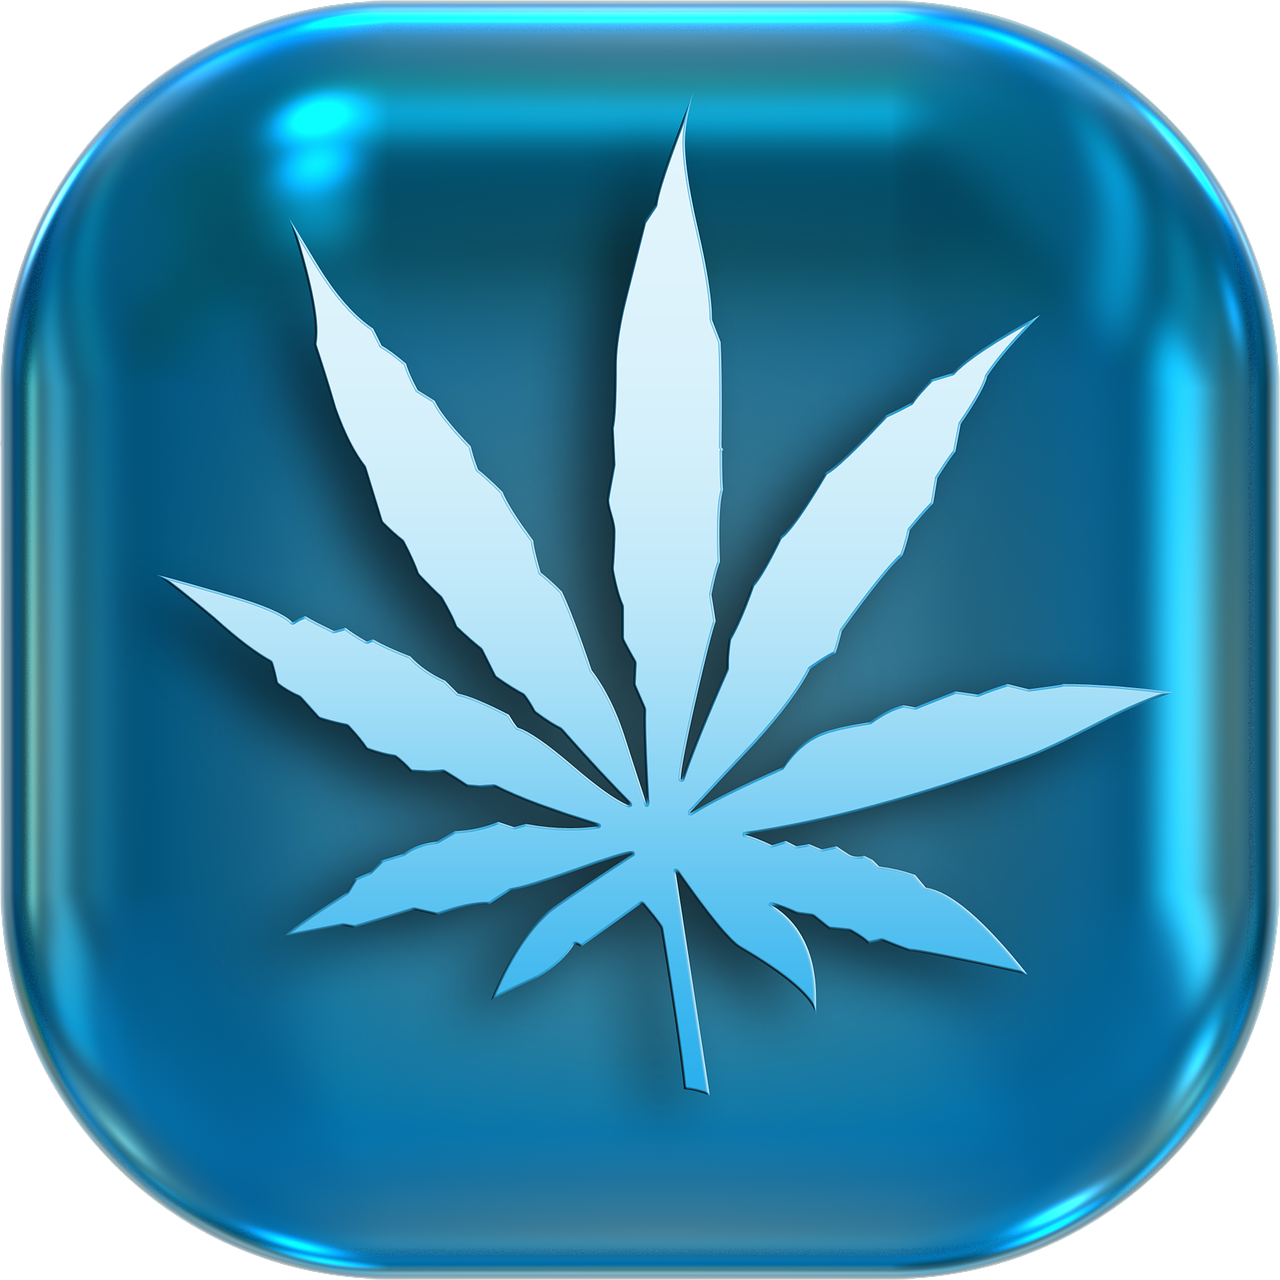 a blue button with a marijuana leaf on it, inspired by Mary Jane Begin, pixabay, hurufiyya, blue glass dreadlocks, snoop dog, computer generated, pod